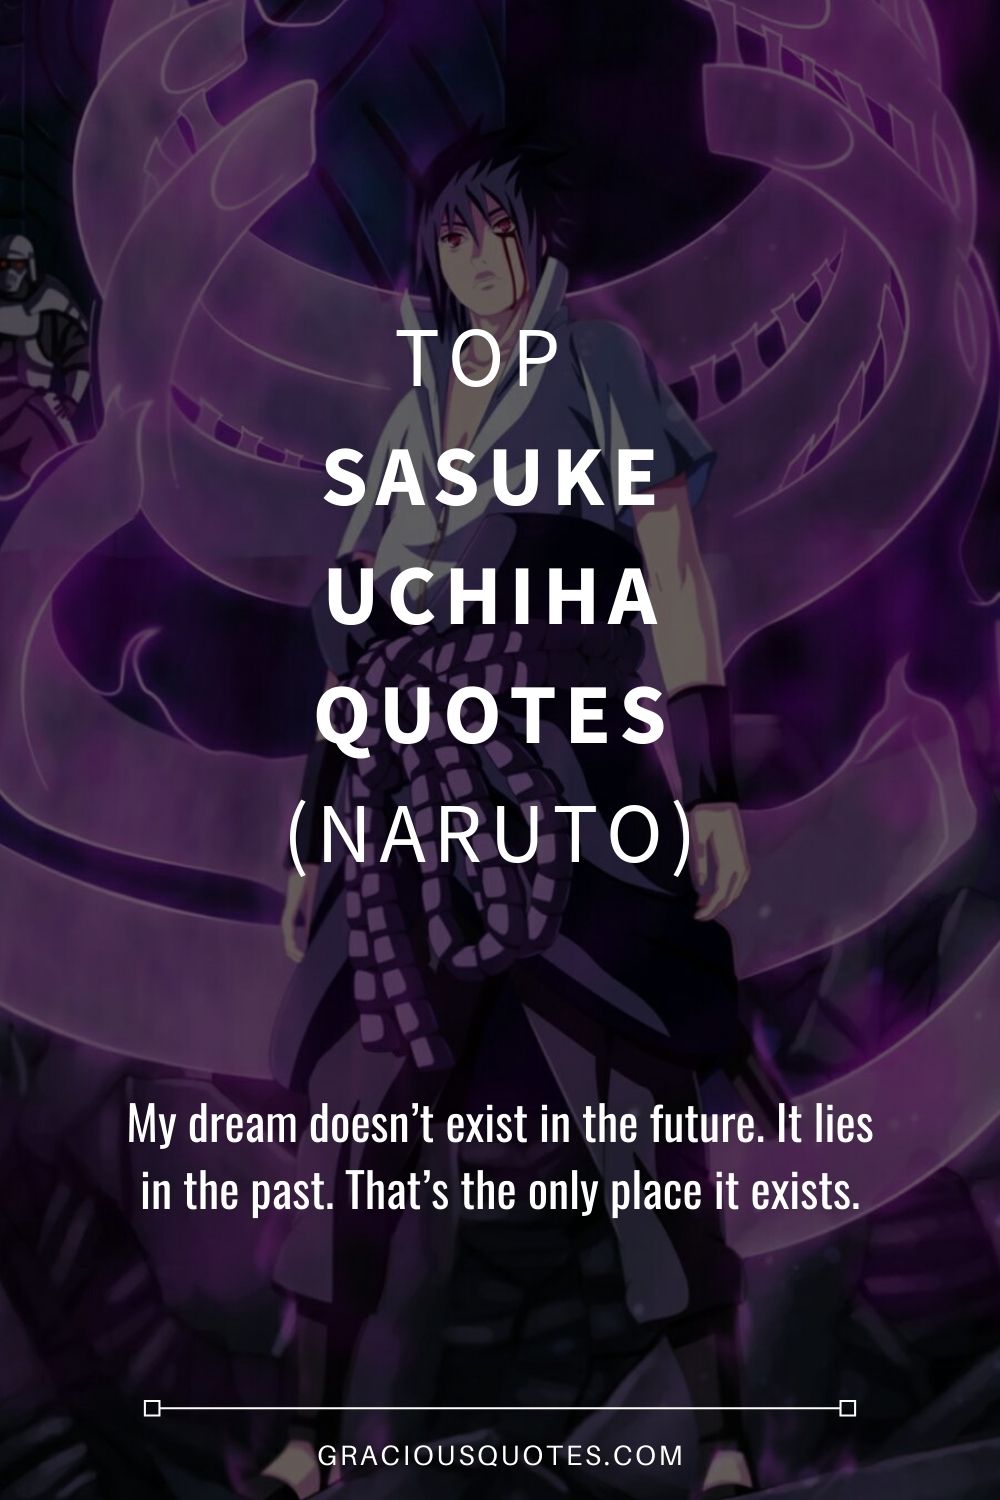 Sasuke Uchiha Quotes (NARUTO)